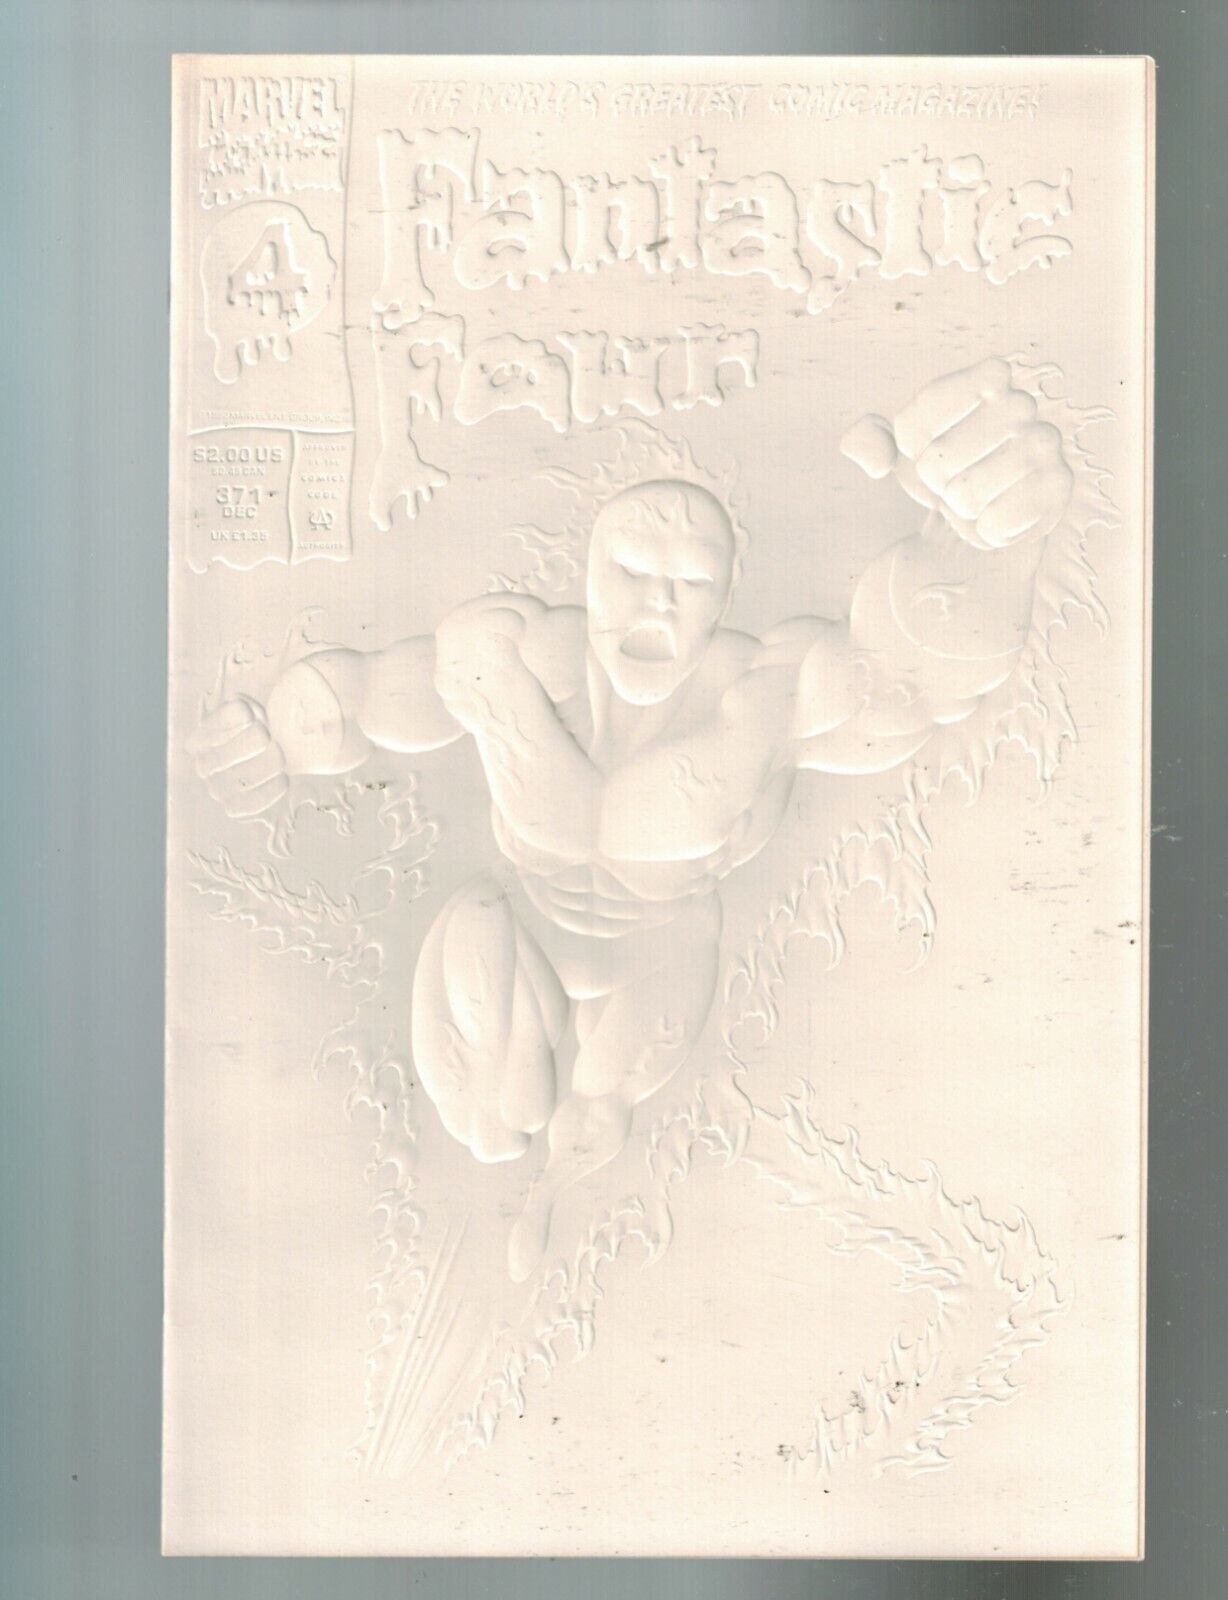 Fantastic Four #371 (Marvel) 1st Print UNREAD VF+ or Better 10x Investors Lot